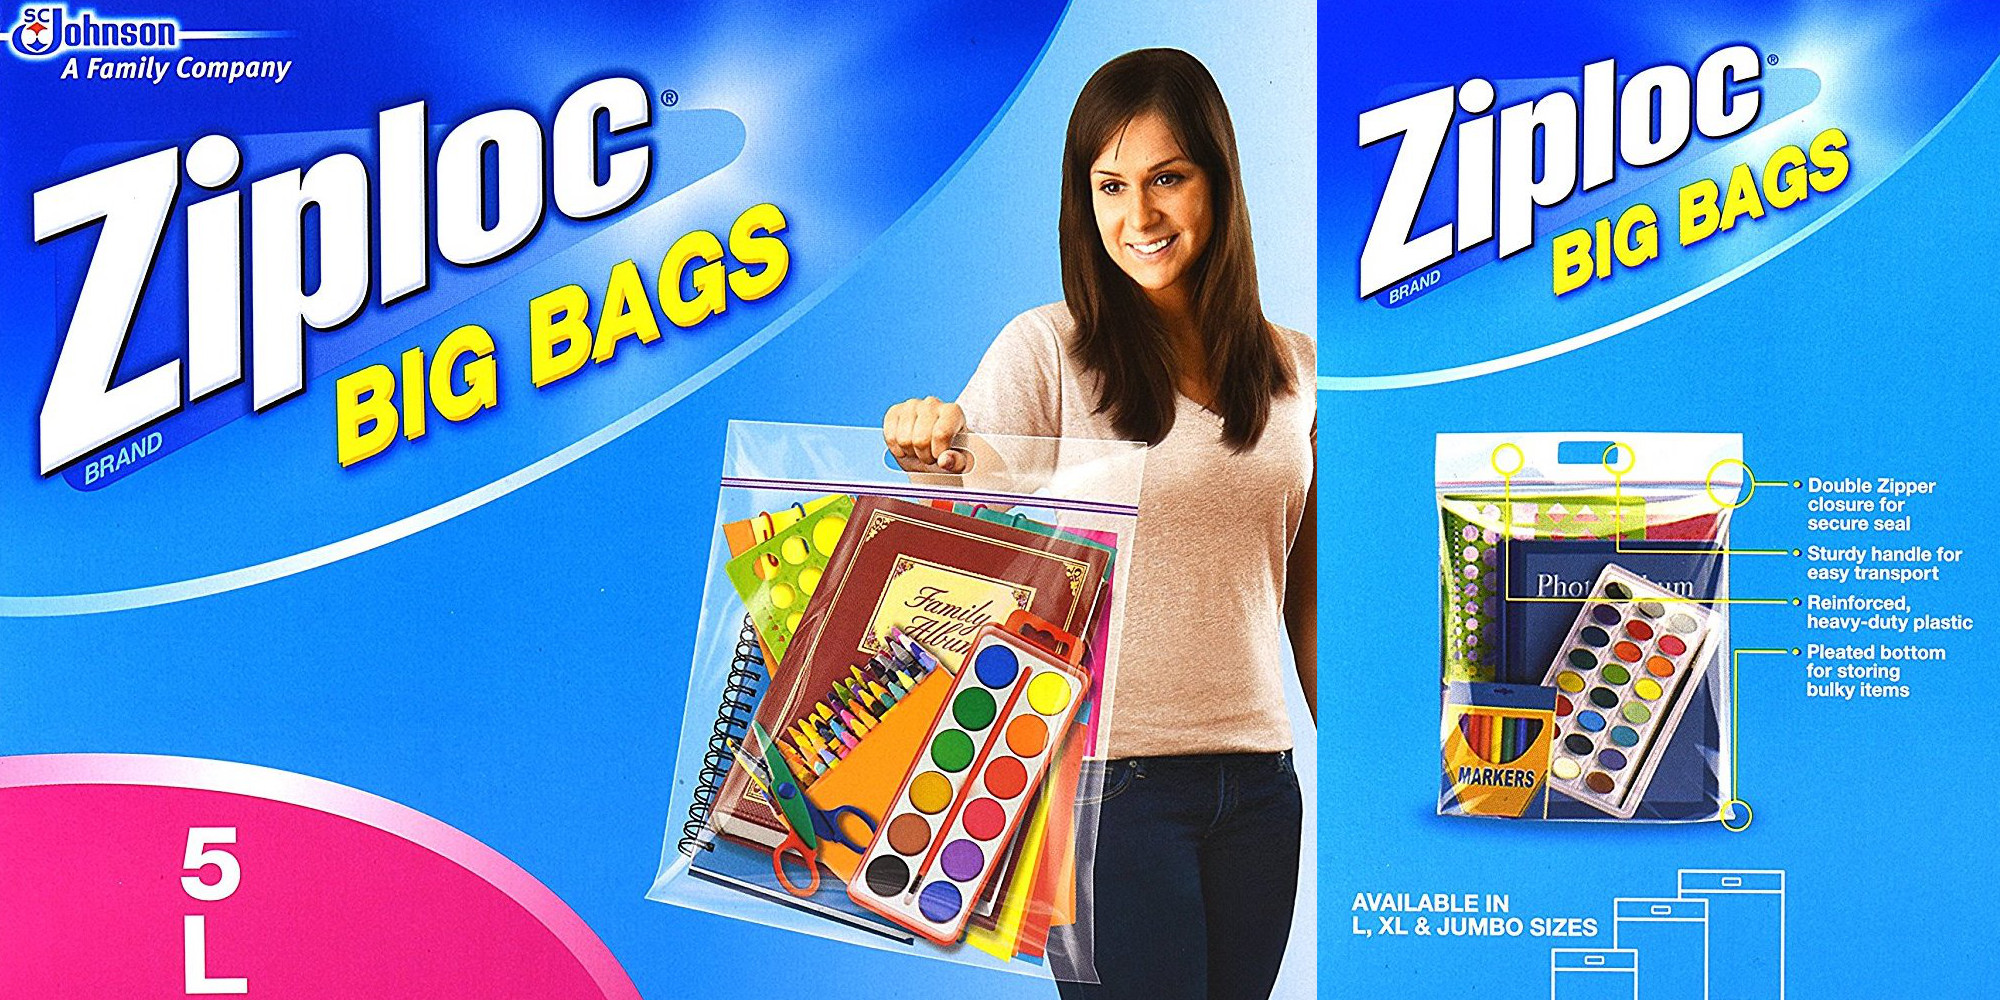 Ziploc Big Bag Double Zipper Jumbo Big Bags, 3 Count 